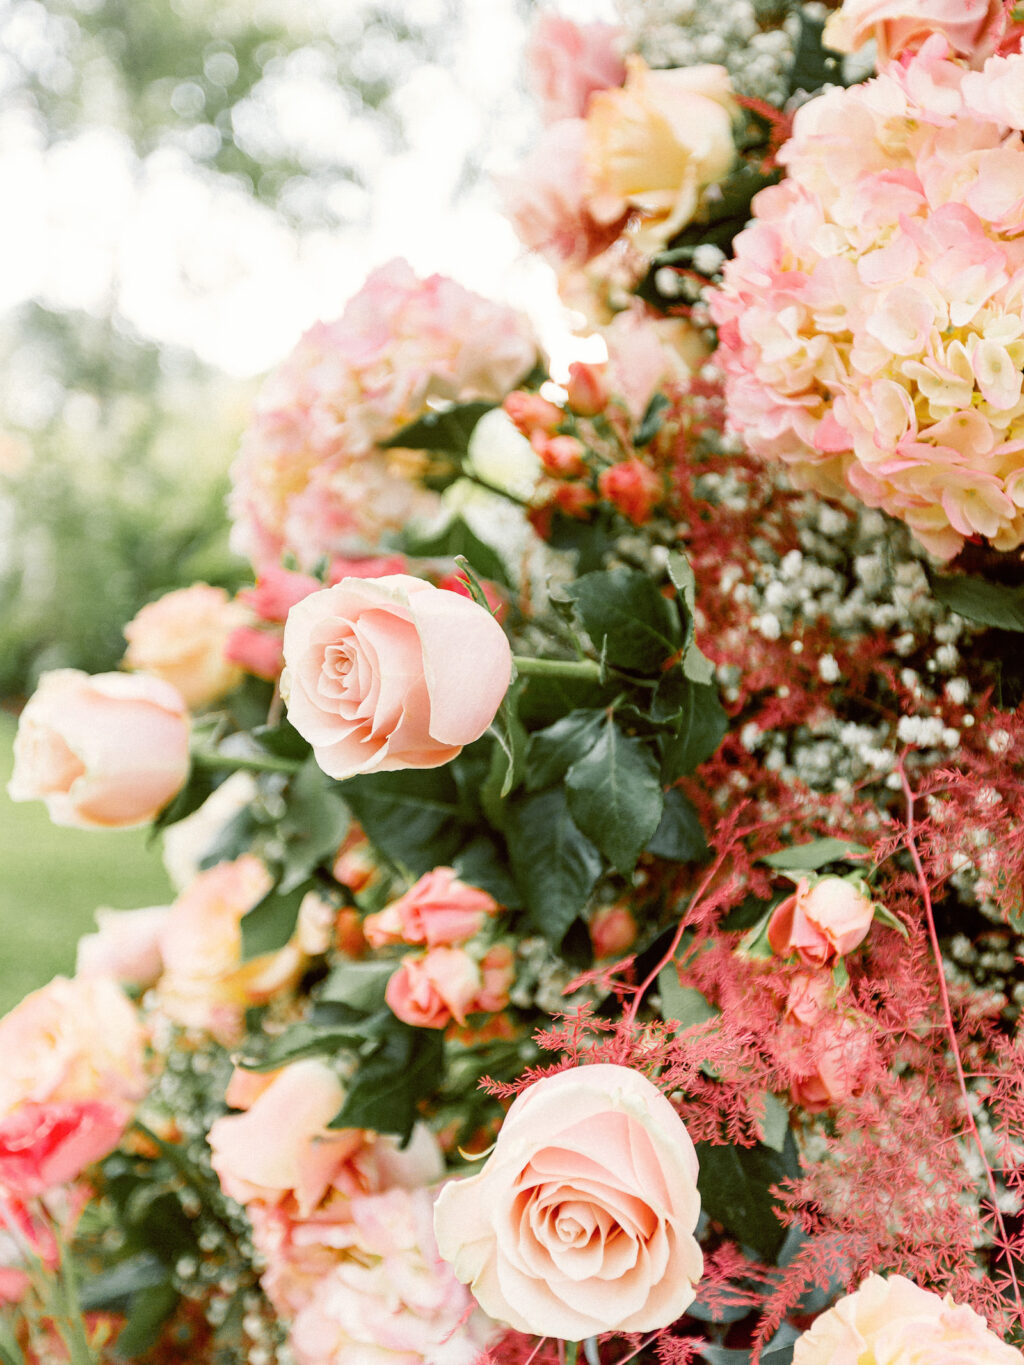 Fairytale Wedding Decor, Pink Roses and Hydrangeas Lush Altar Flowers | Tampa Bay Wedding Photographer Dewitt for Love | Wedding Florist Lemon Drops